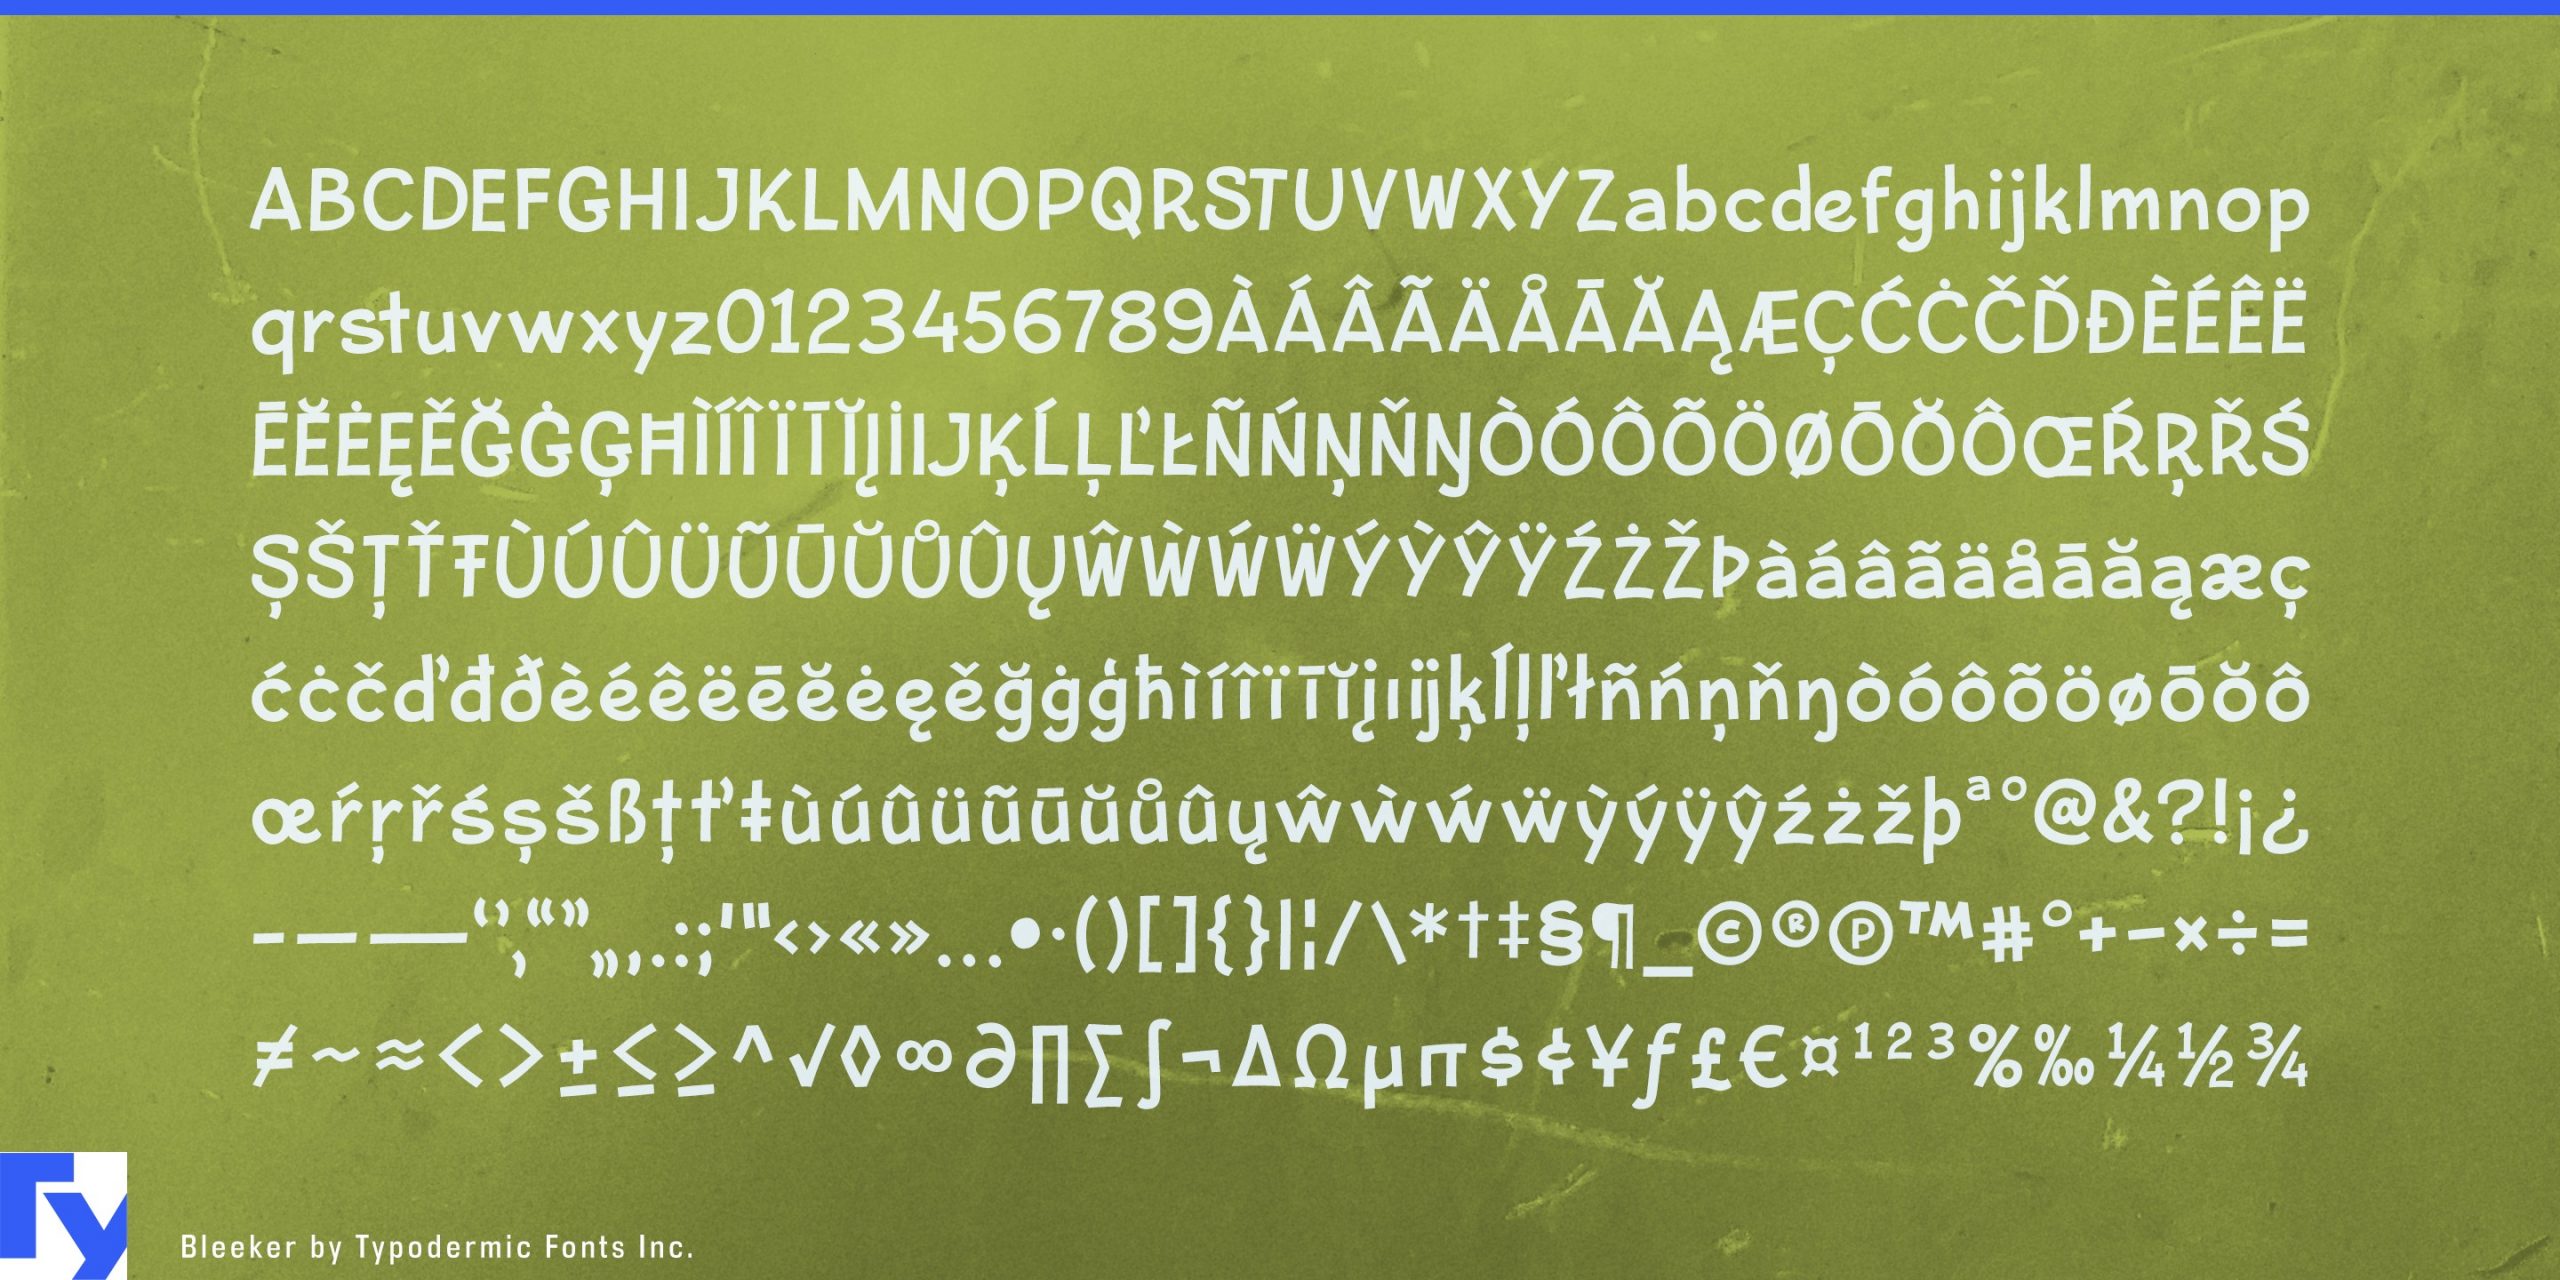 Custom Pairings, Natural Look: Explore Bleeker's Smart Typography